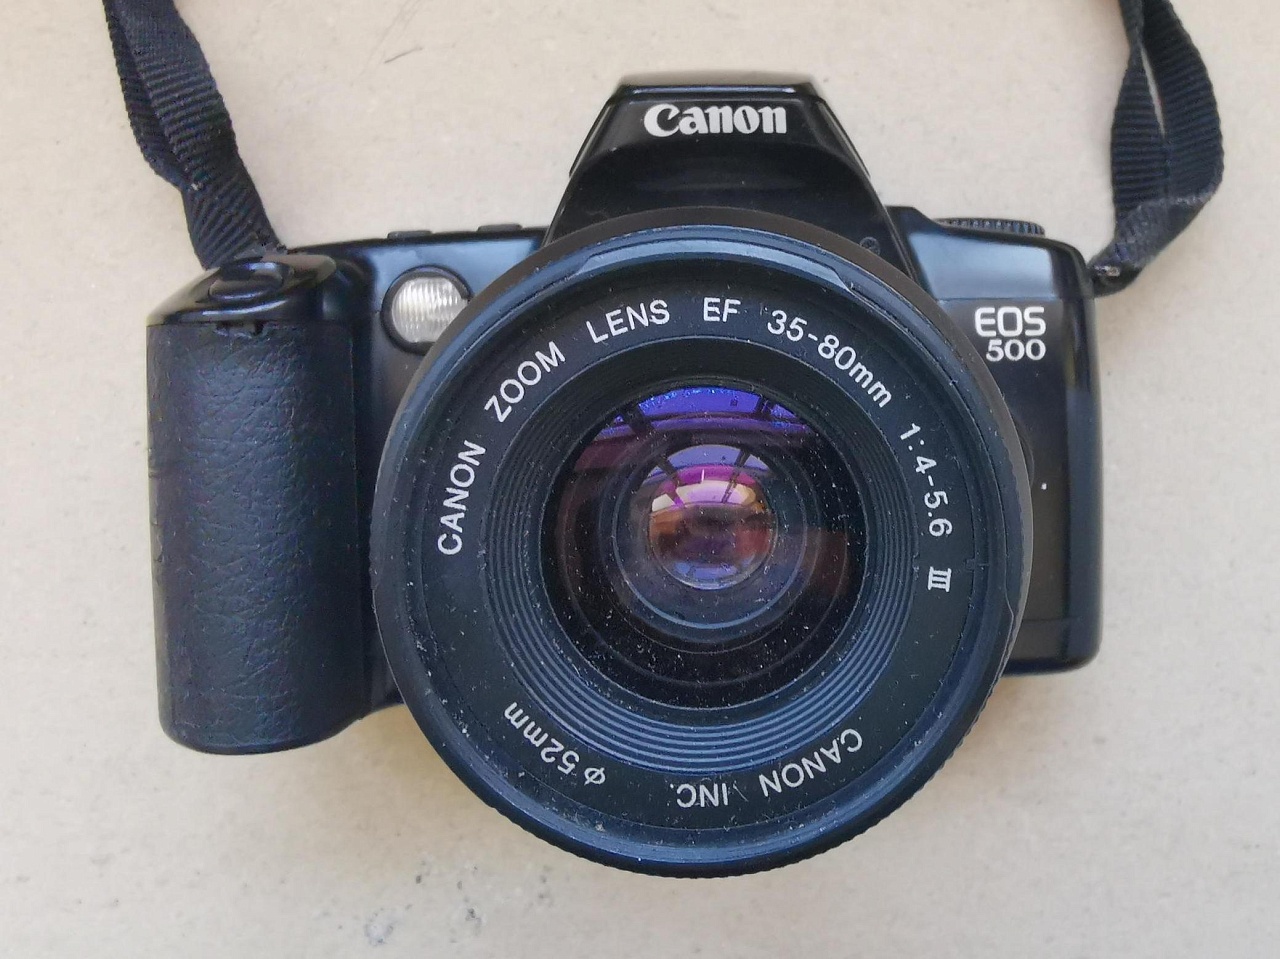 Canon EOS 500 / Kiss + Canon zoom lens EF 35-80 mm f/4-5.6 III фото №1